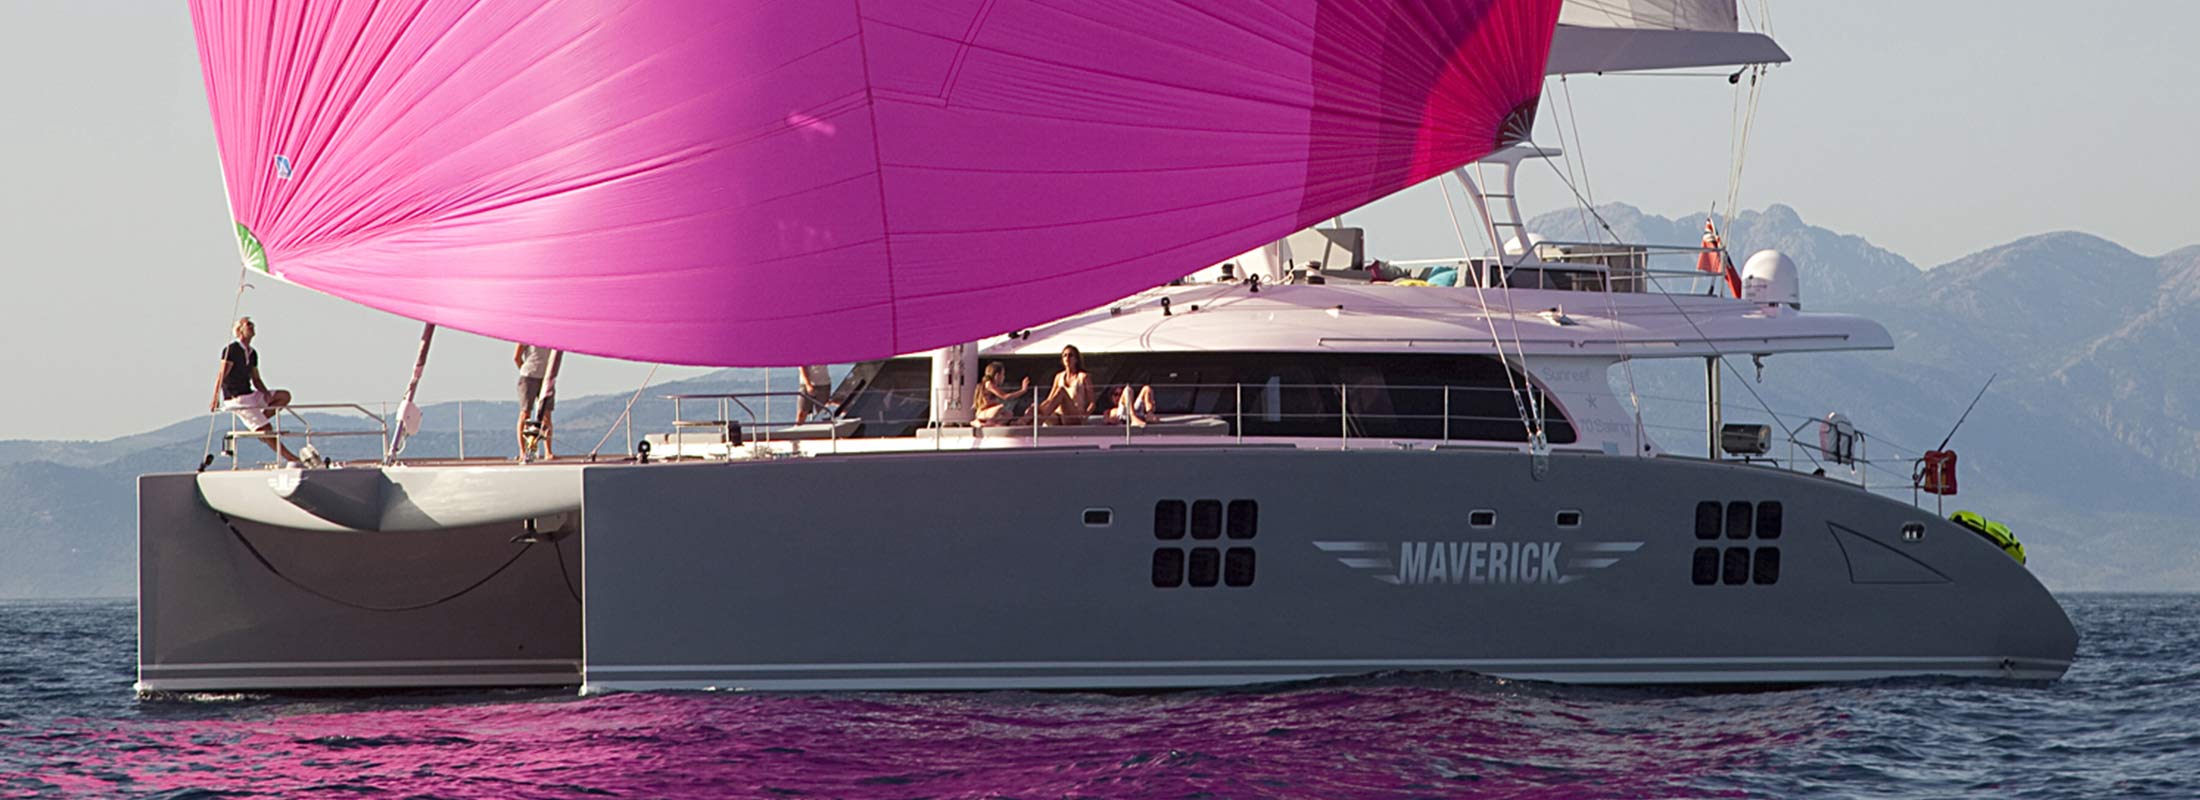 Maverick Sailing Yacht for Charter Caribbean Sea slider 1 